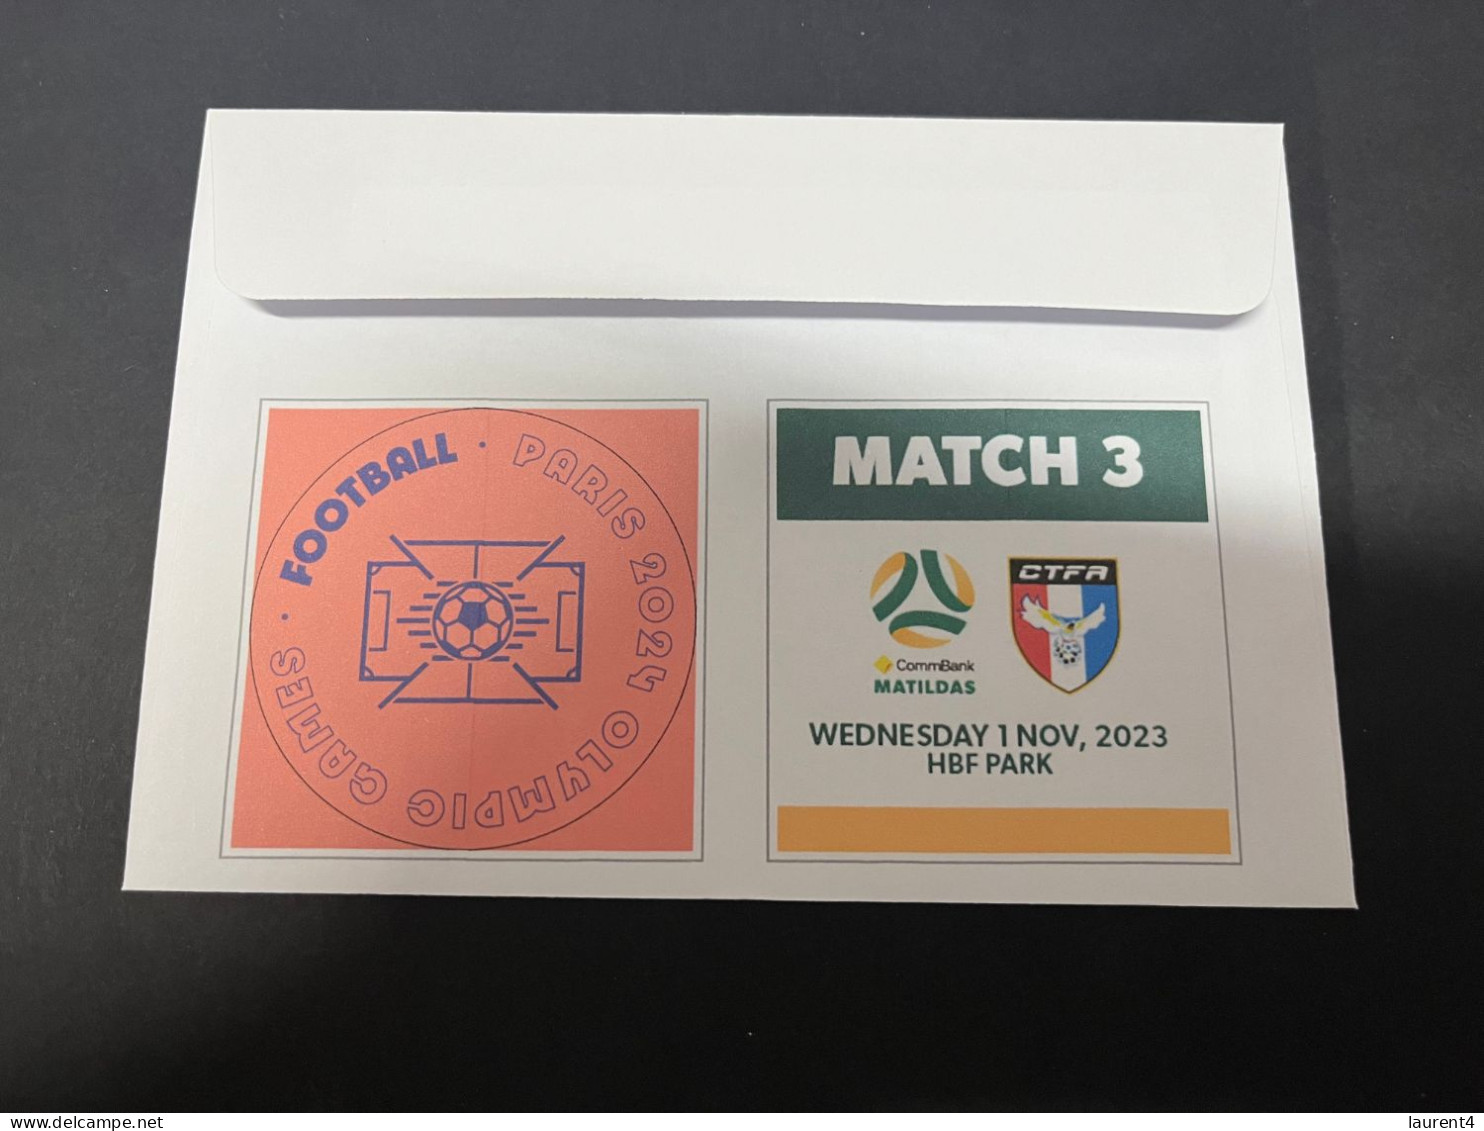 4-11-2023 (1 V 18) Australia (3) V Taiwan (0) - Matildas Olympic 2024 Qualifiers (match 3) 1-11-2023 In Perth - Zomer 2024: Parijs